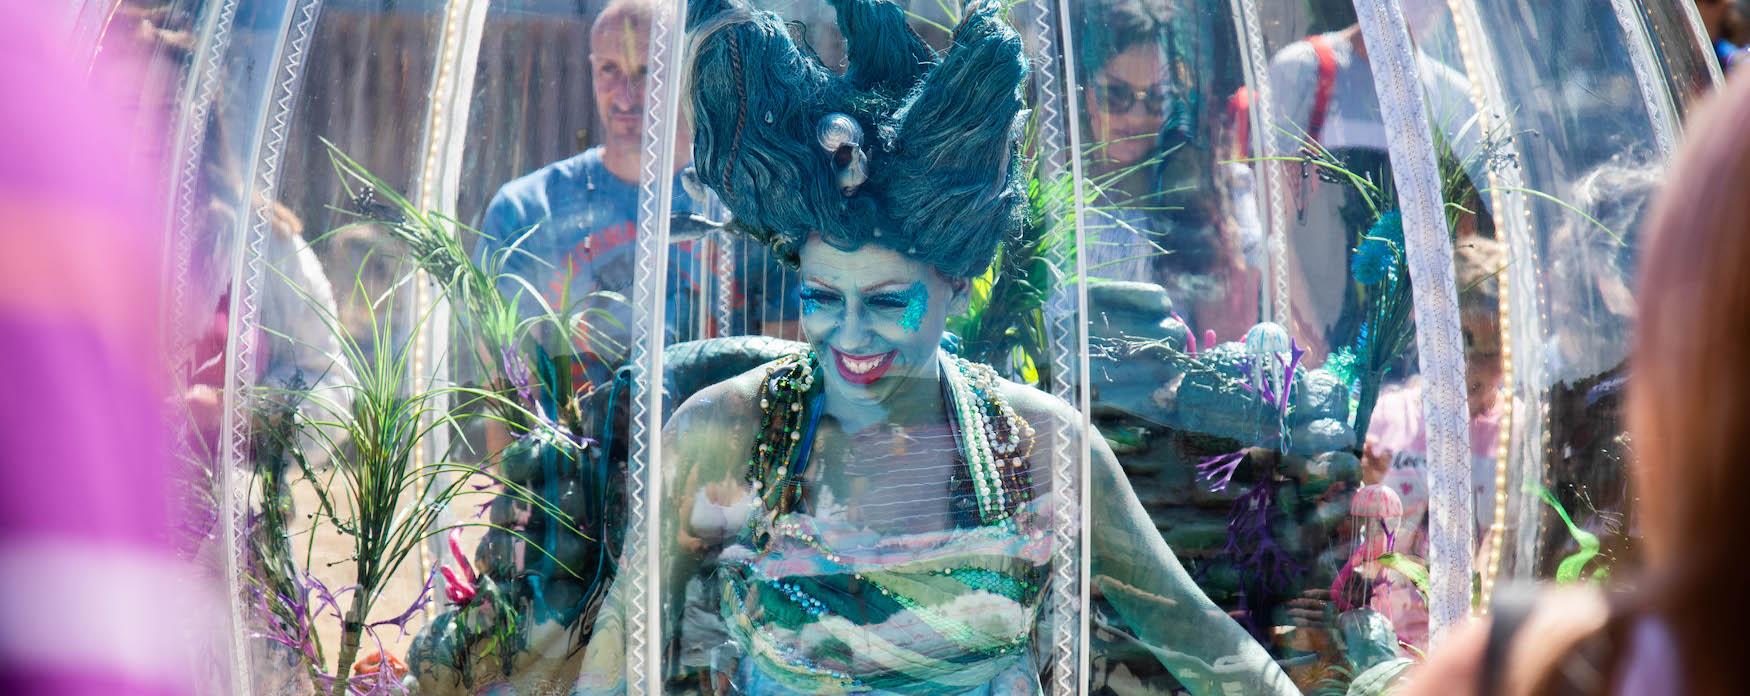 The Mermaid by the Sea Show Globe at Sea Magic by Phoebe Wingrove – © Phoebe Wingrove